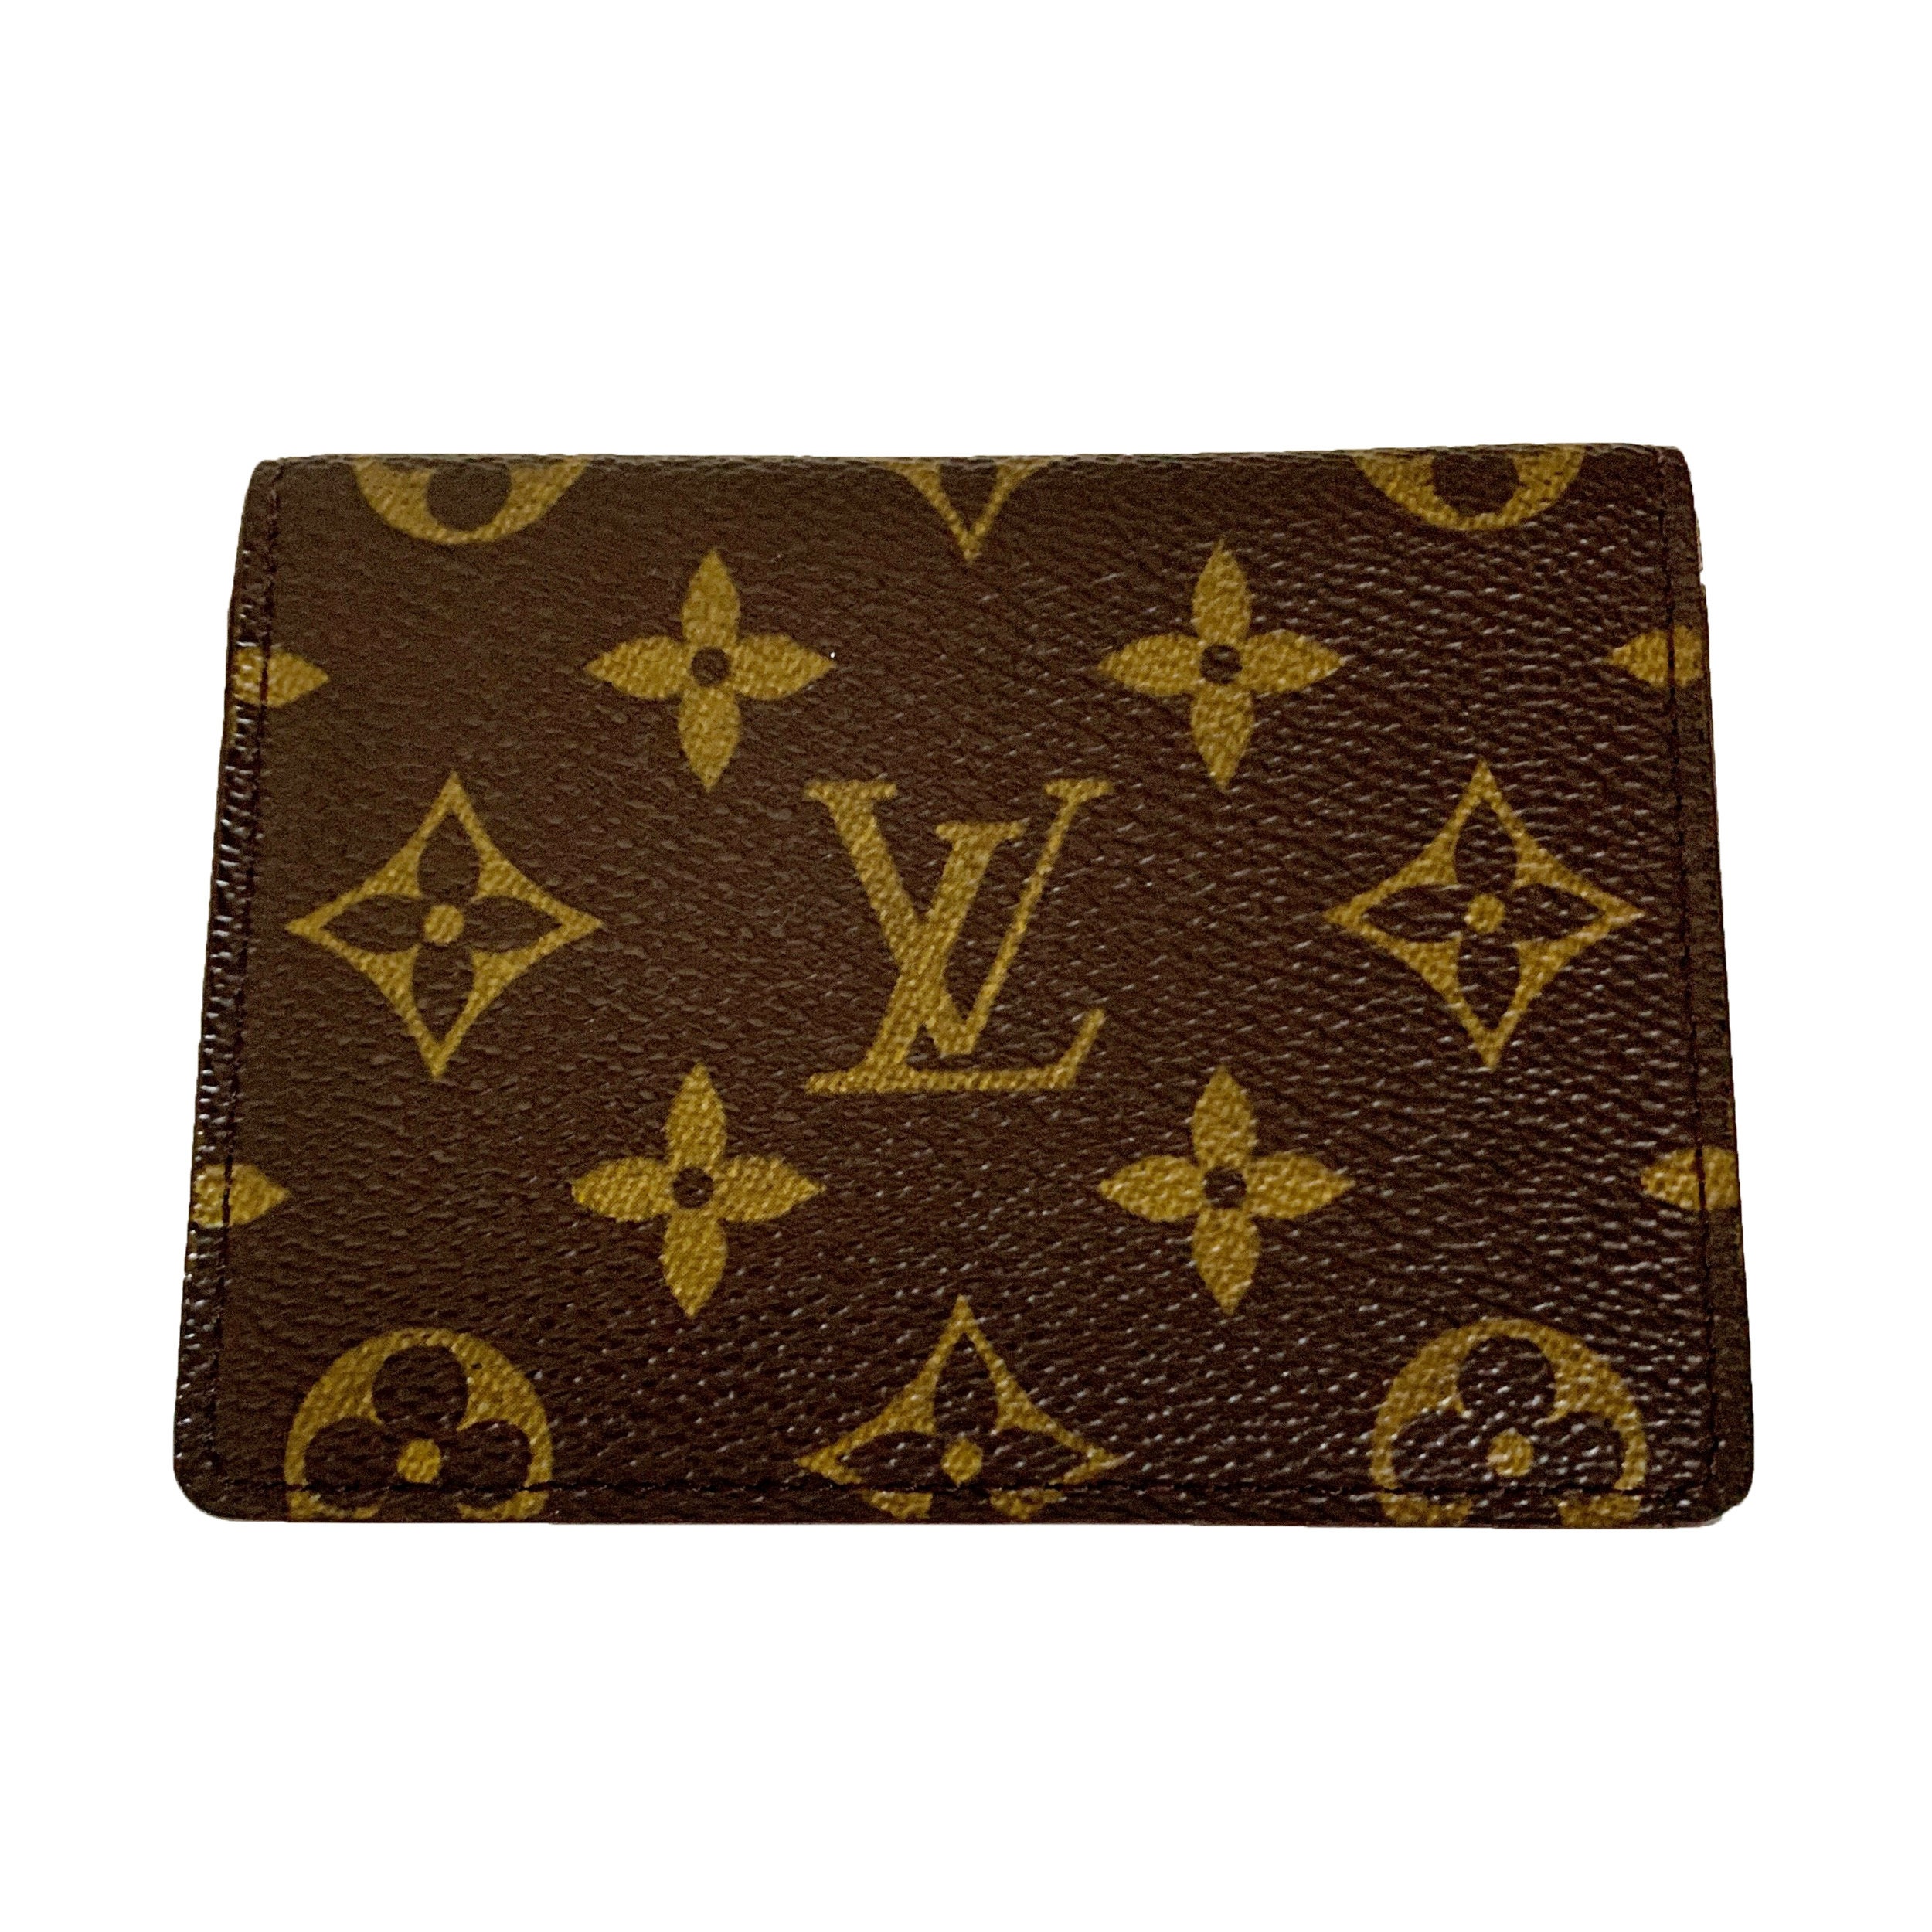 Authentic Louis Vuitton Gift Card Box & Envelope  Gift card boxes, Gift  card, Louis vuitton gifts